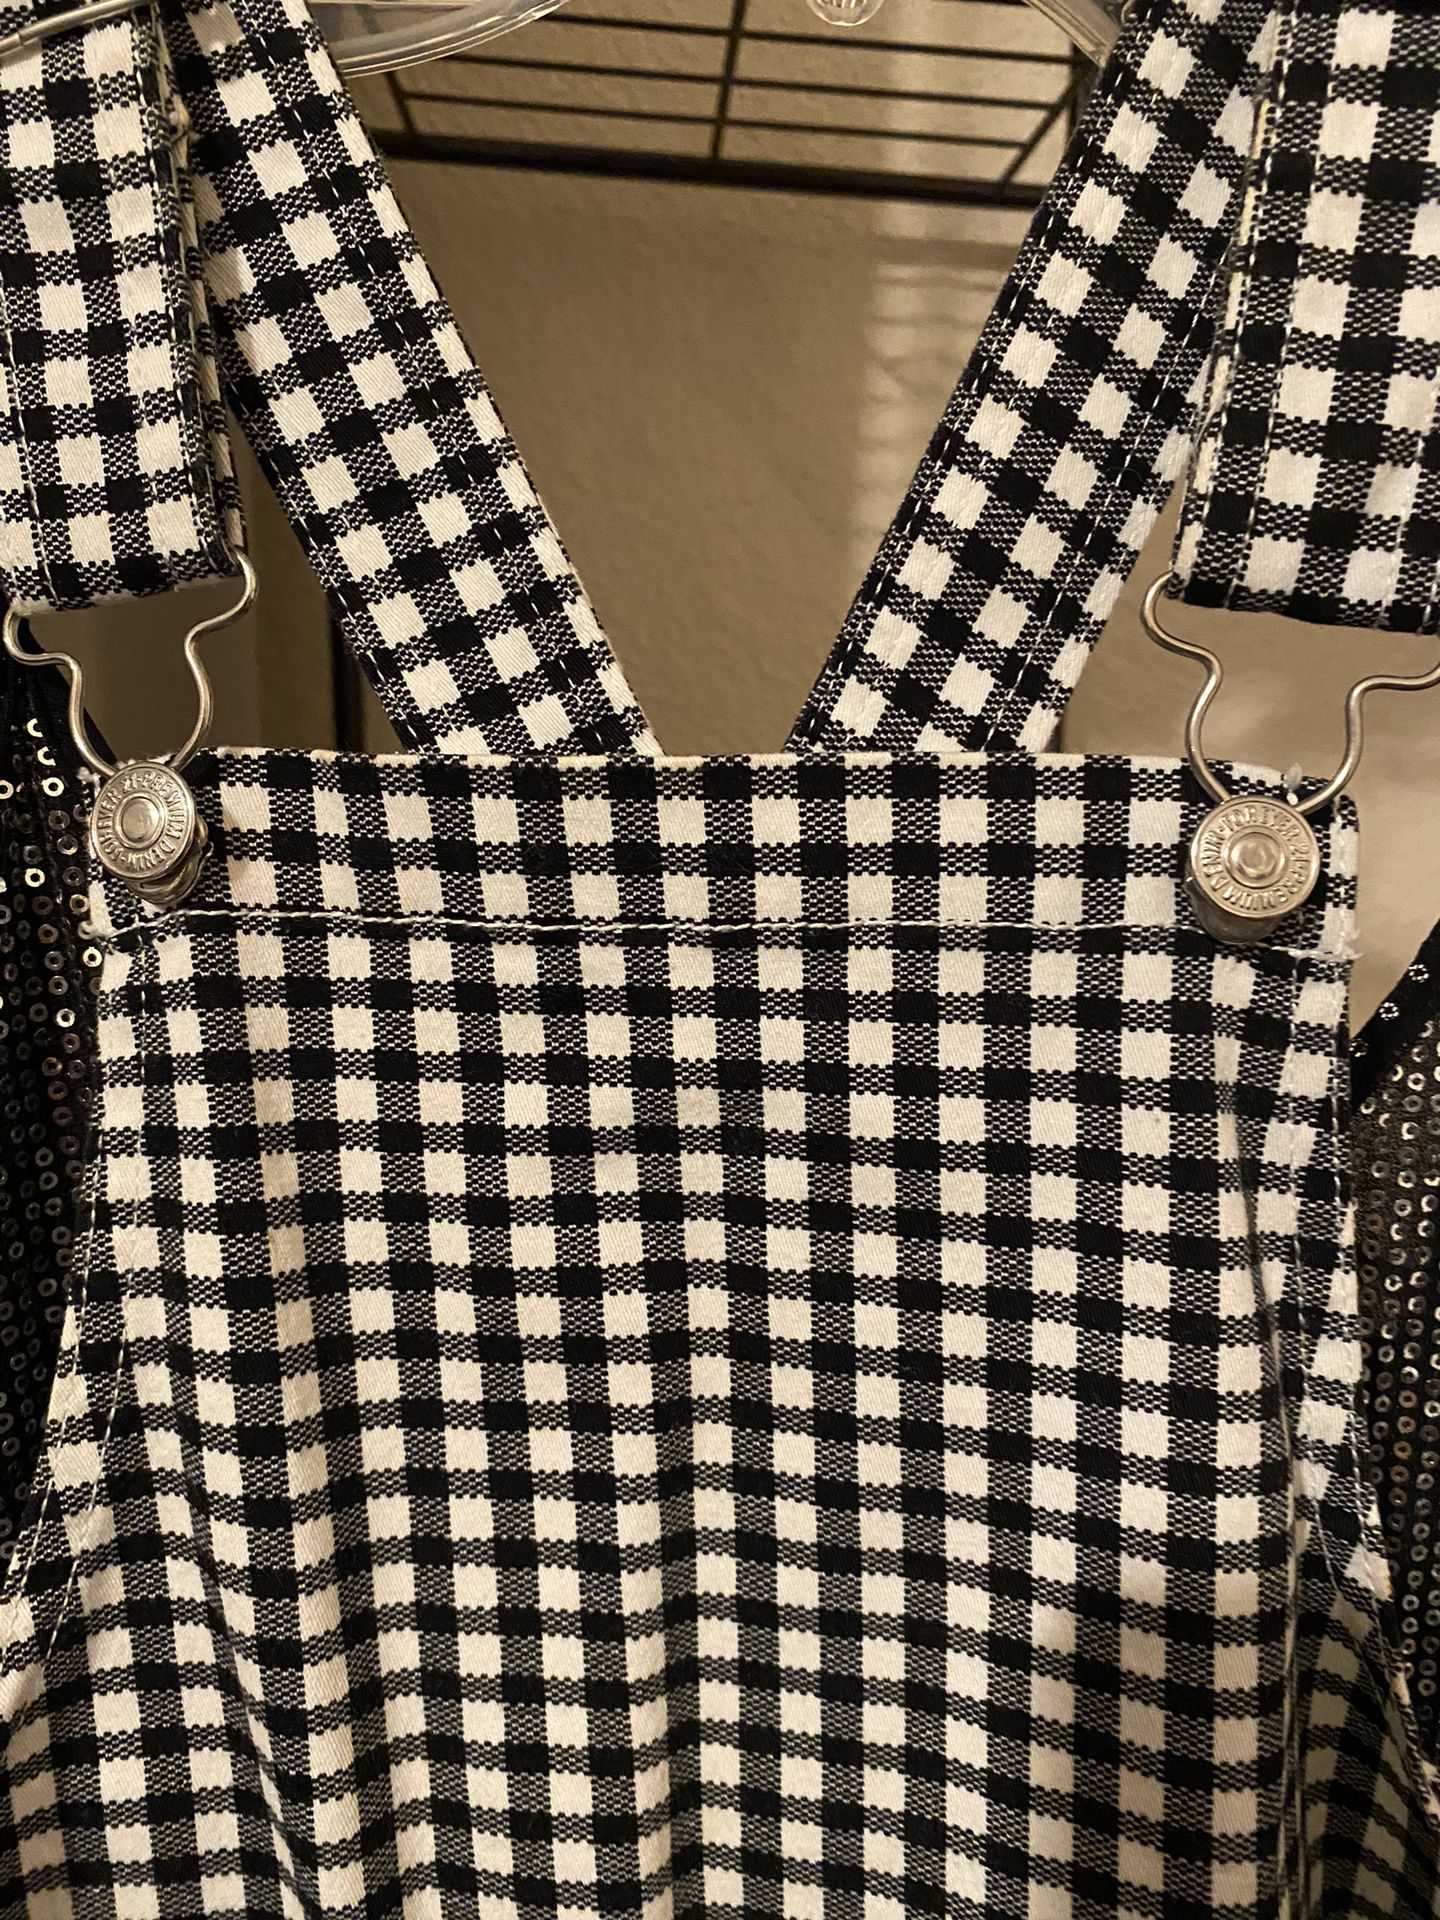 Dress Overalls Girls Size 9/10